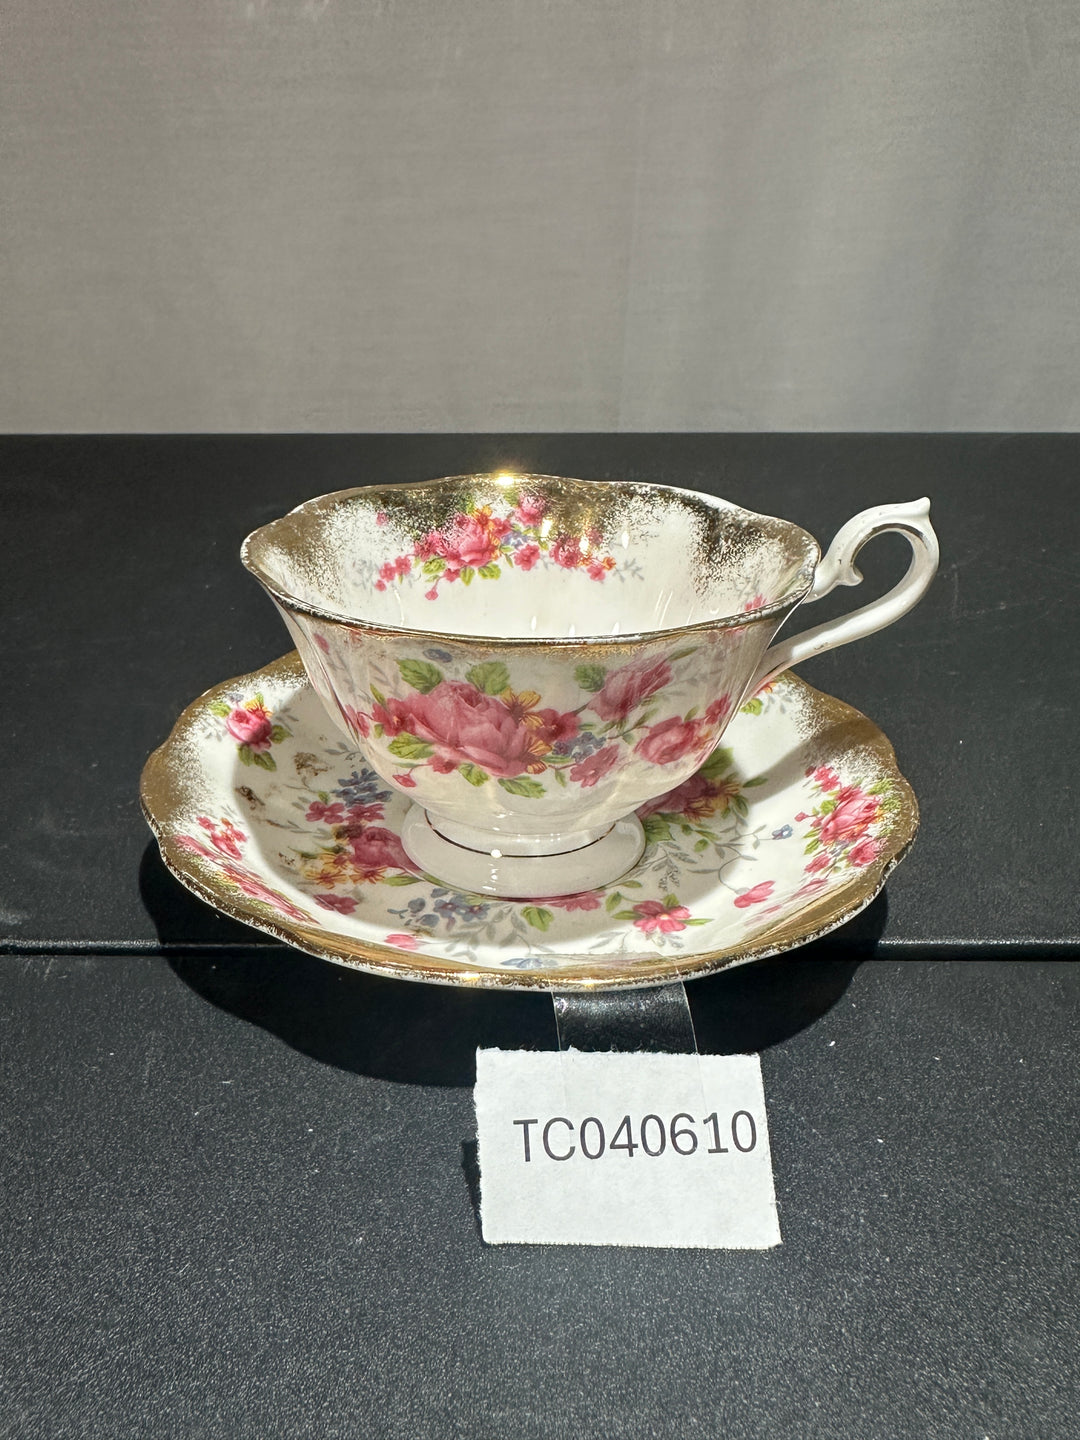 Tea Cup TC040610